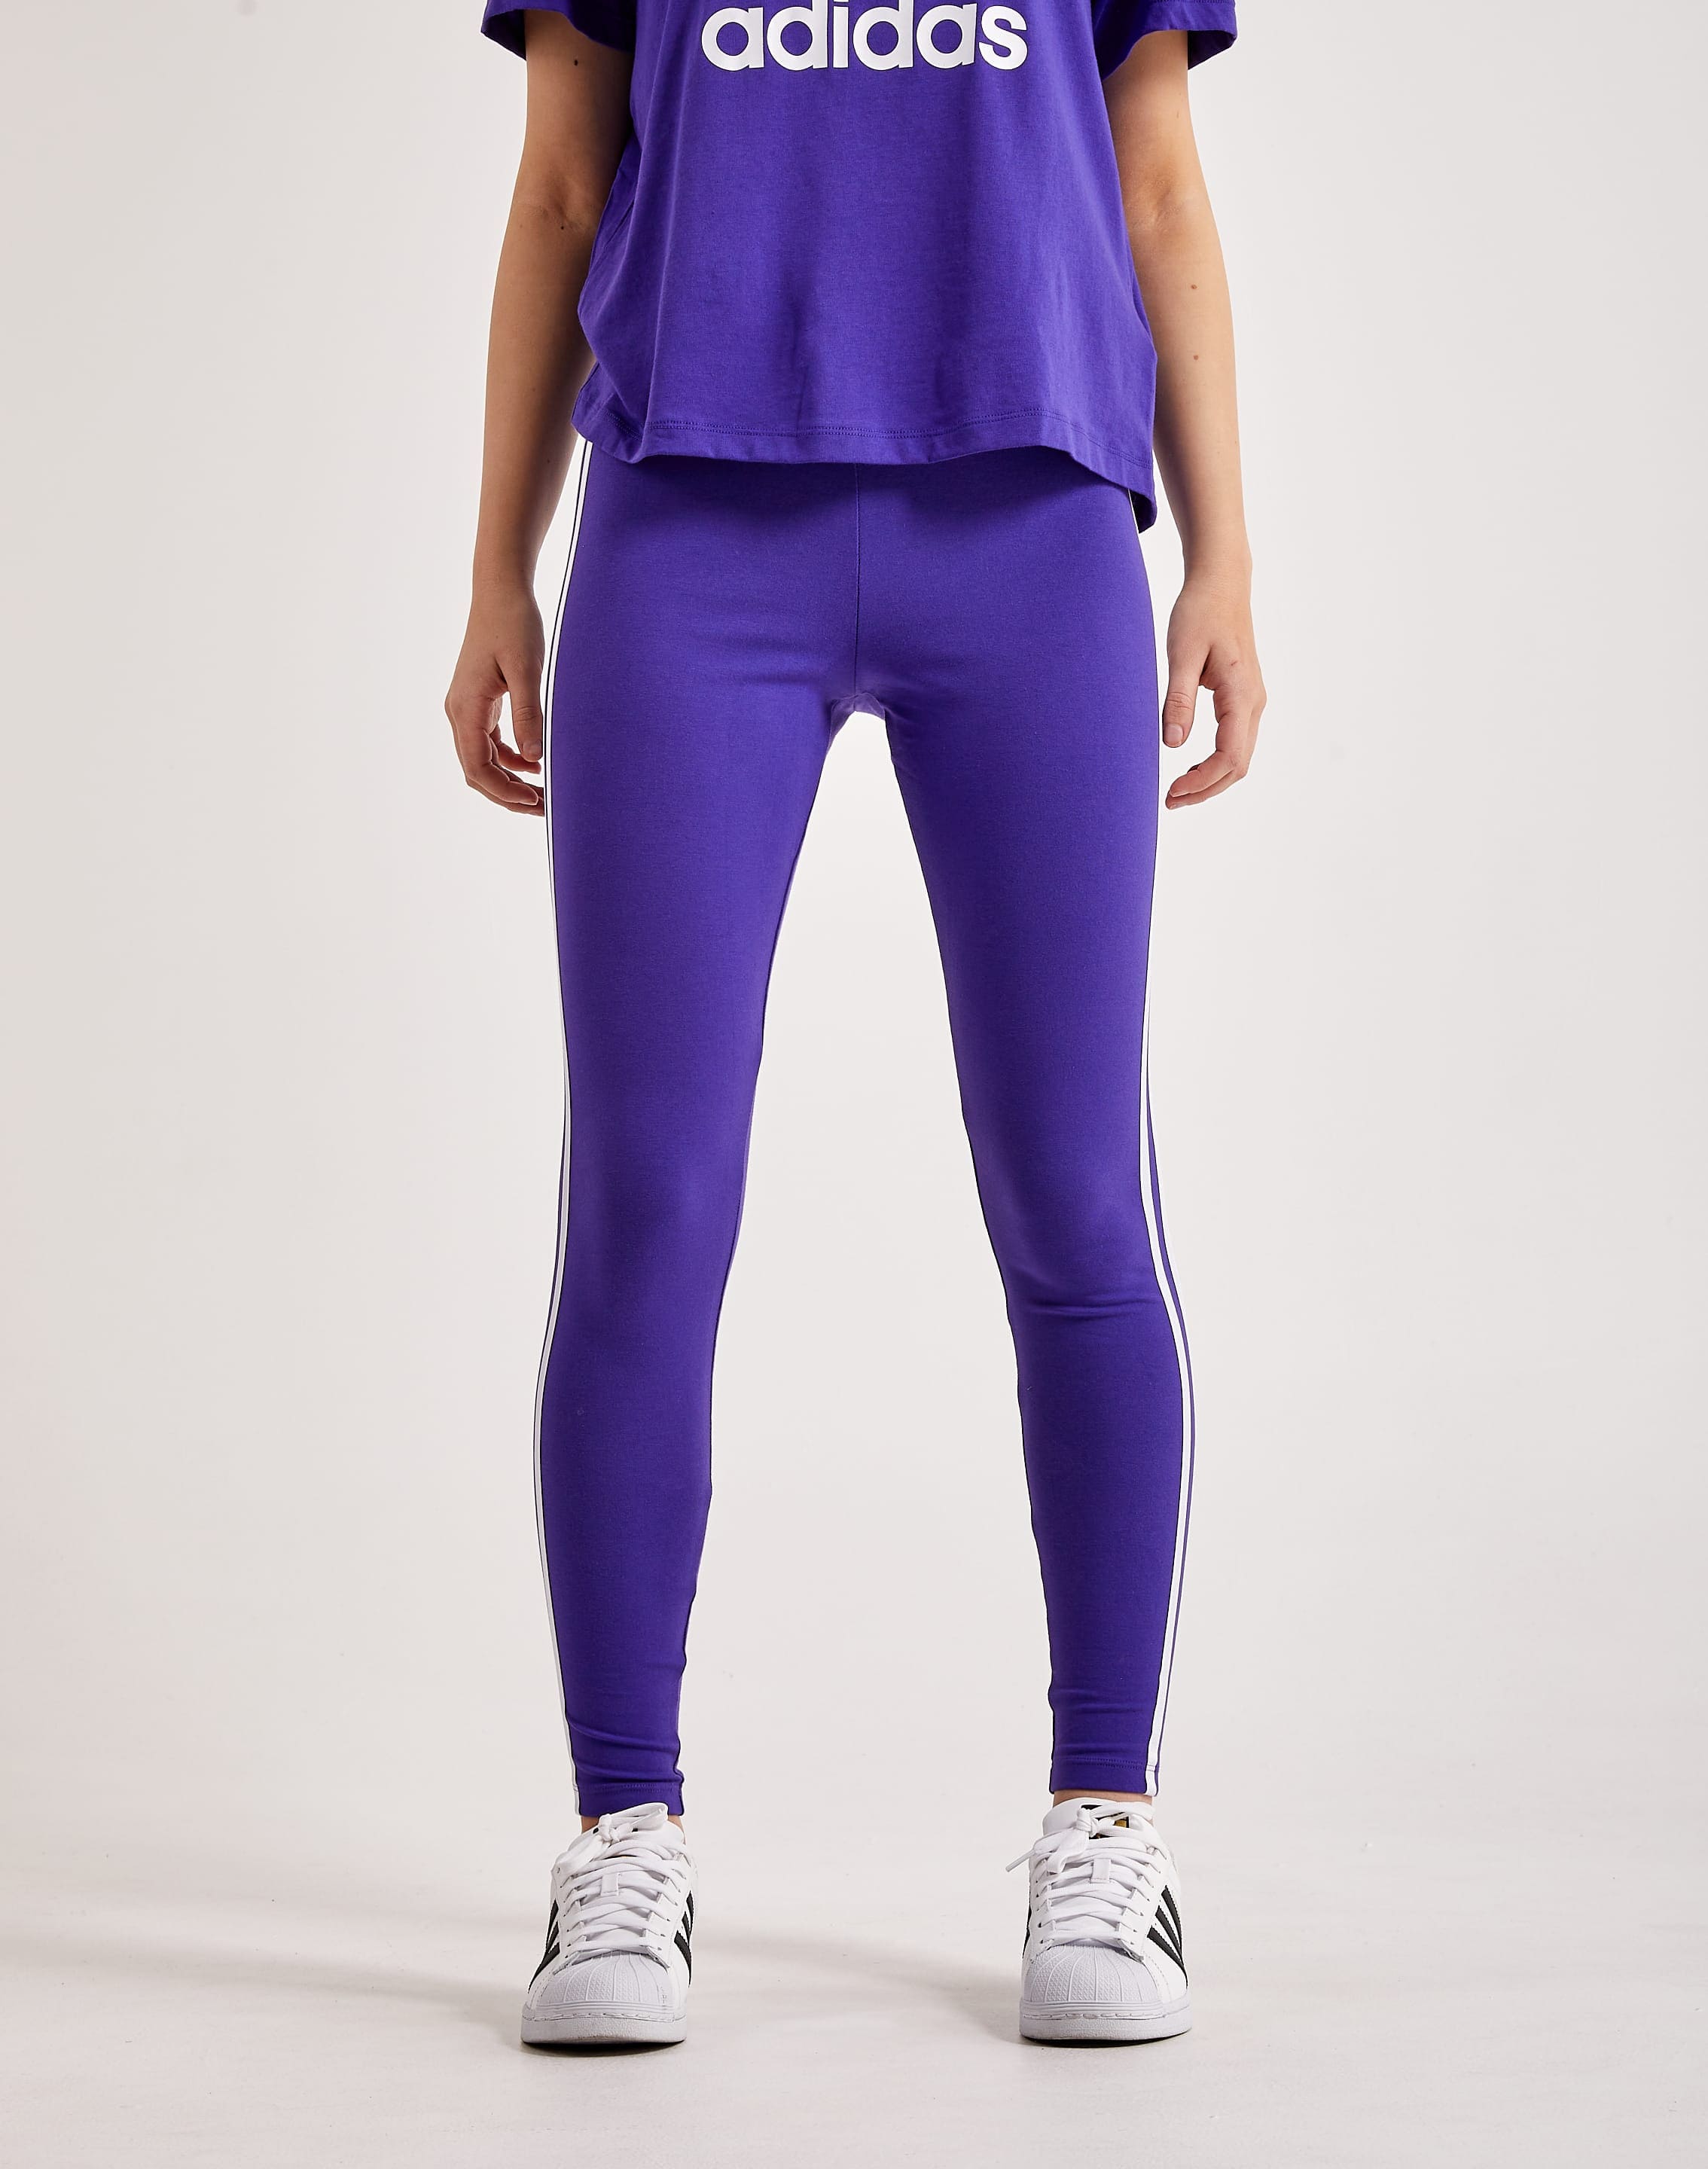 Adidas Sports Bra Womens Size Small Purple Black Trefoil Striped